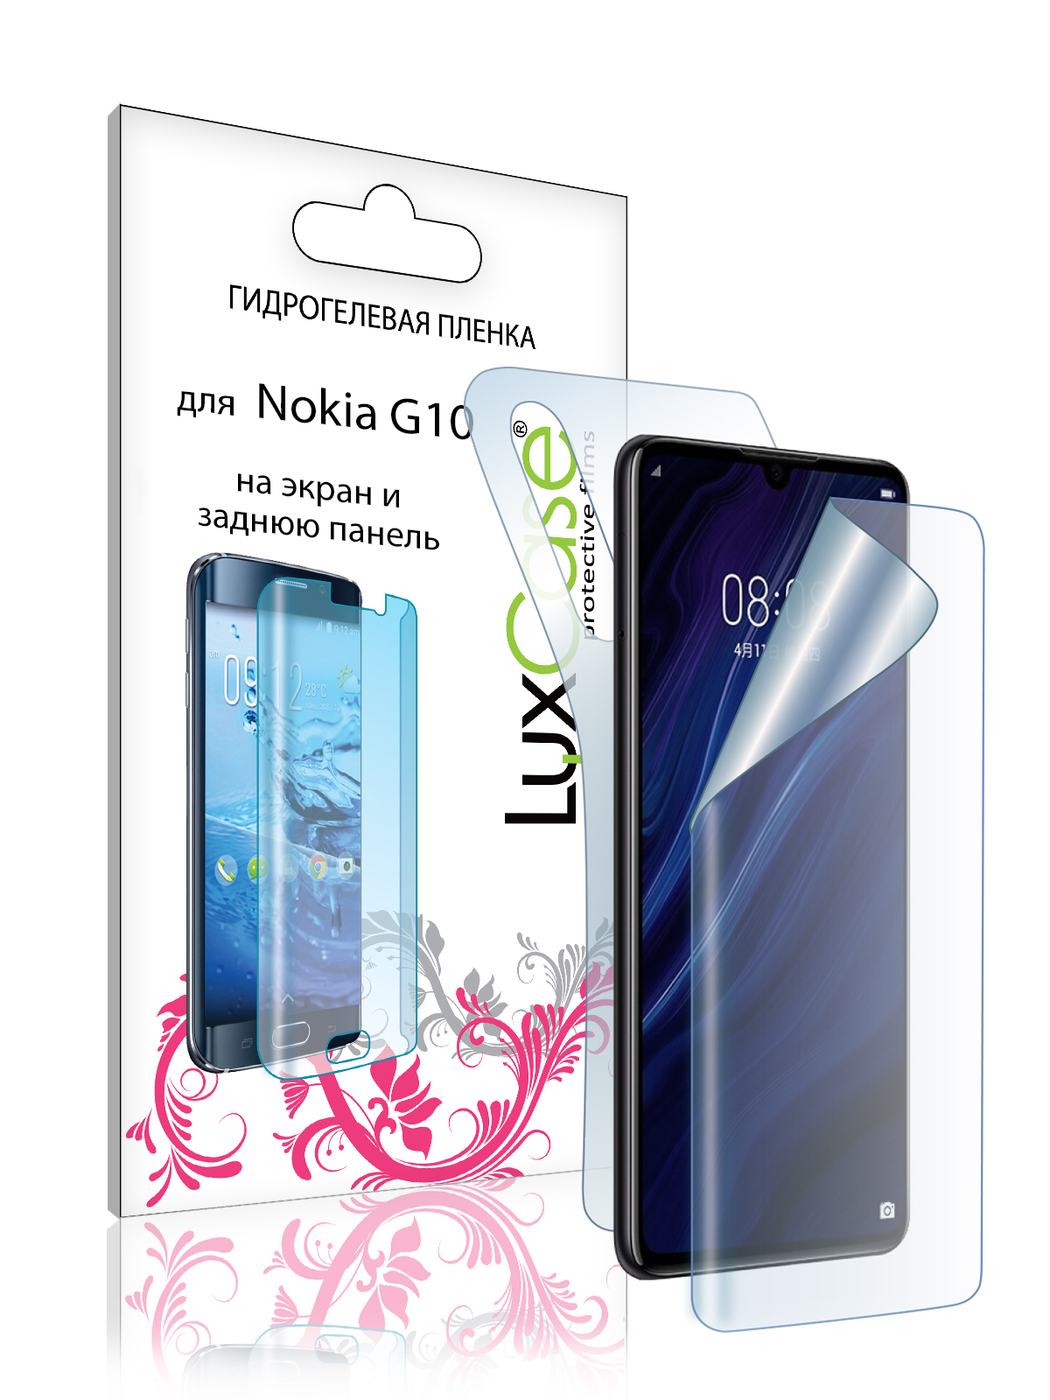 Пленка гидрогелевая LuxCase для Nokia G10 Front and Back Transparent 86391 пленка гидрогелевая luxcase для nokia g20 front and back transparent 86394